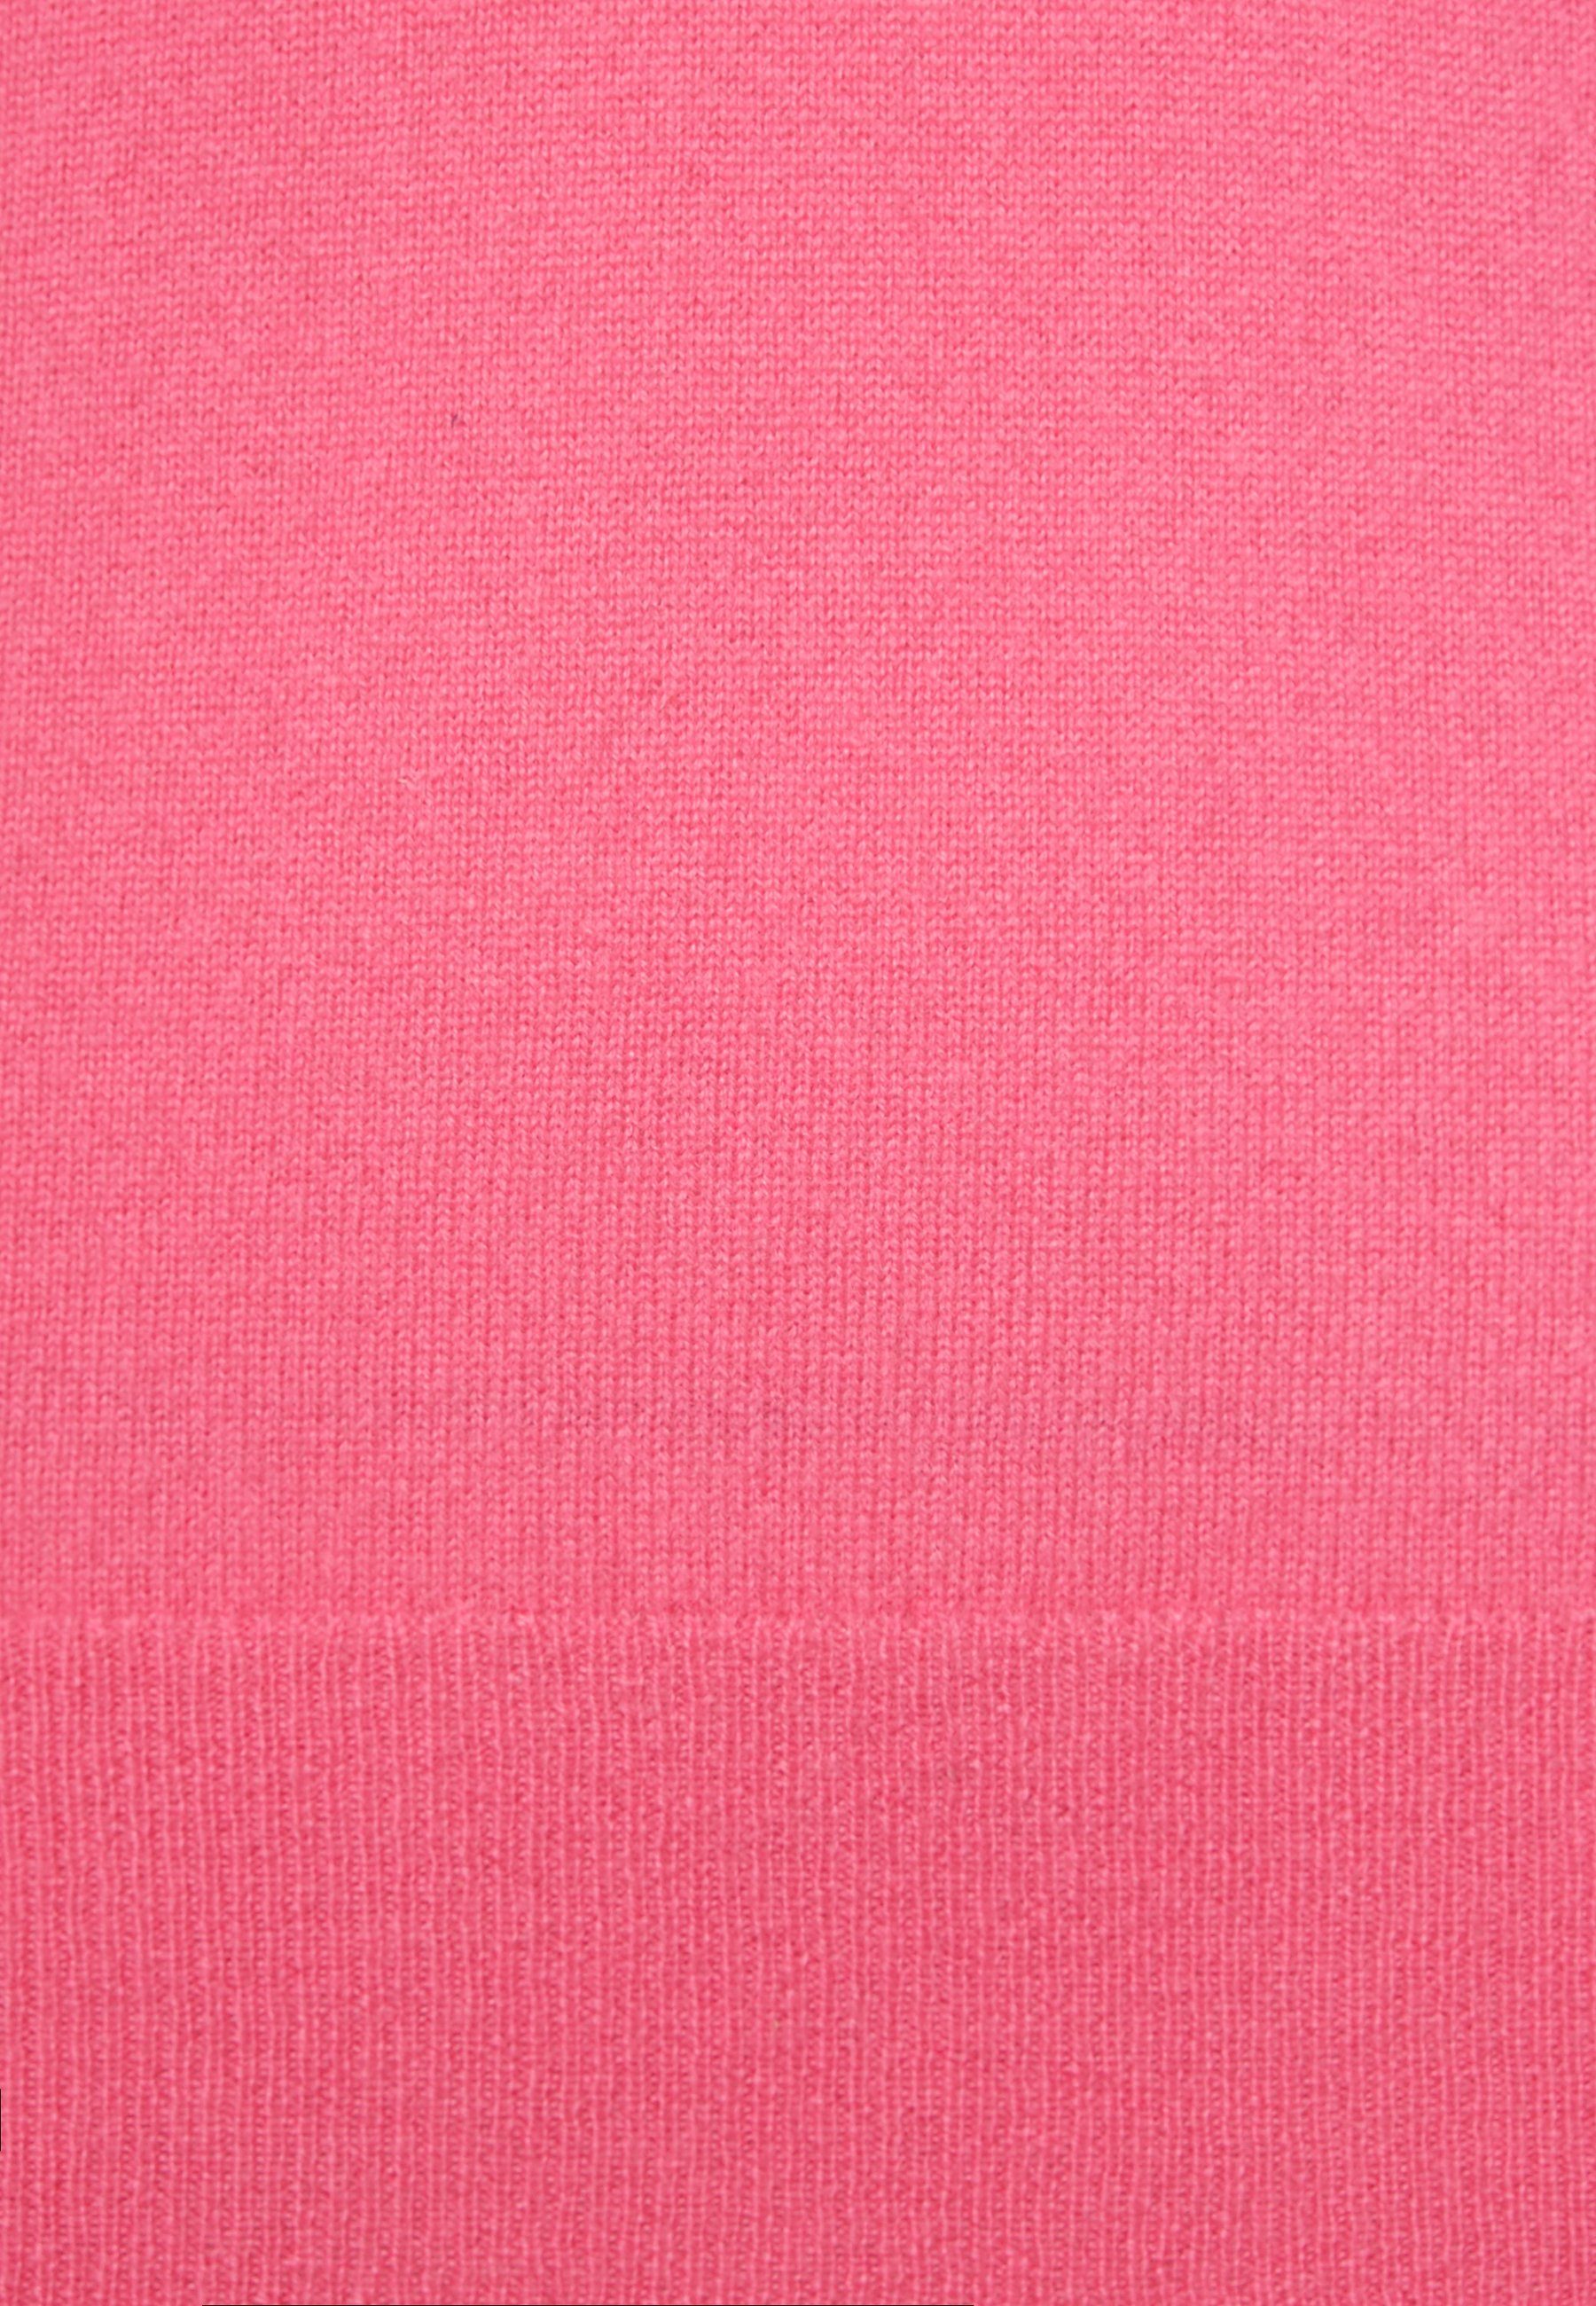 Kaschmirpullover & Republic V-Neck Style pink neon Kaschmirpullover